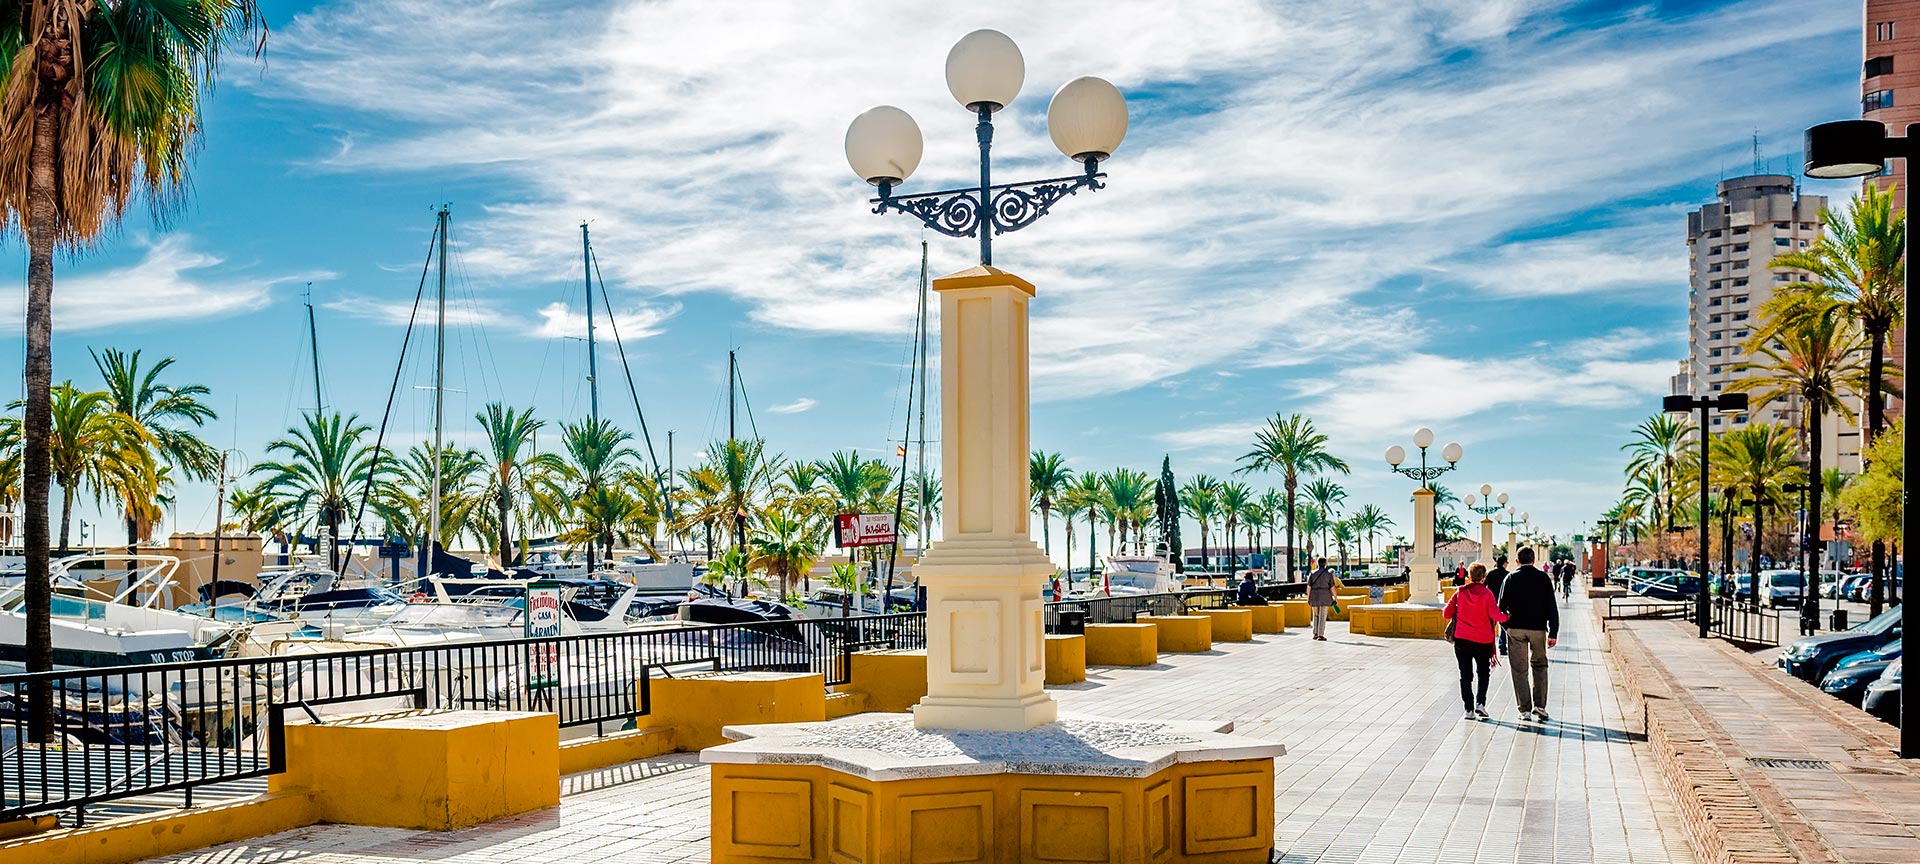 Seafront promenade in Fuengirola (Malaga, Andalusia)